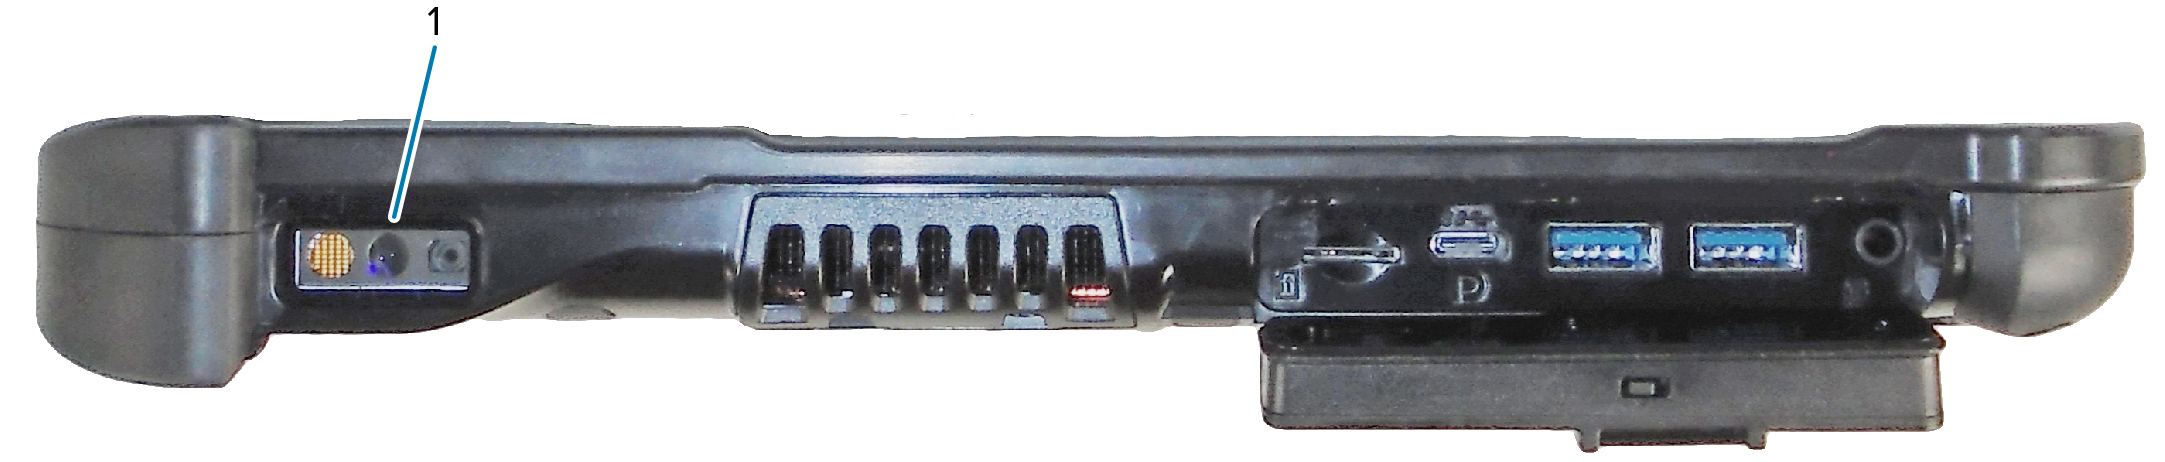 XPAD L10ax 바코드 스캐너